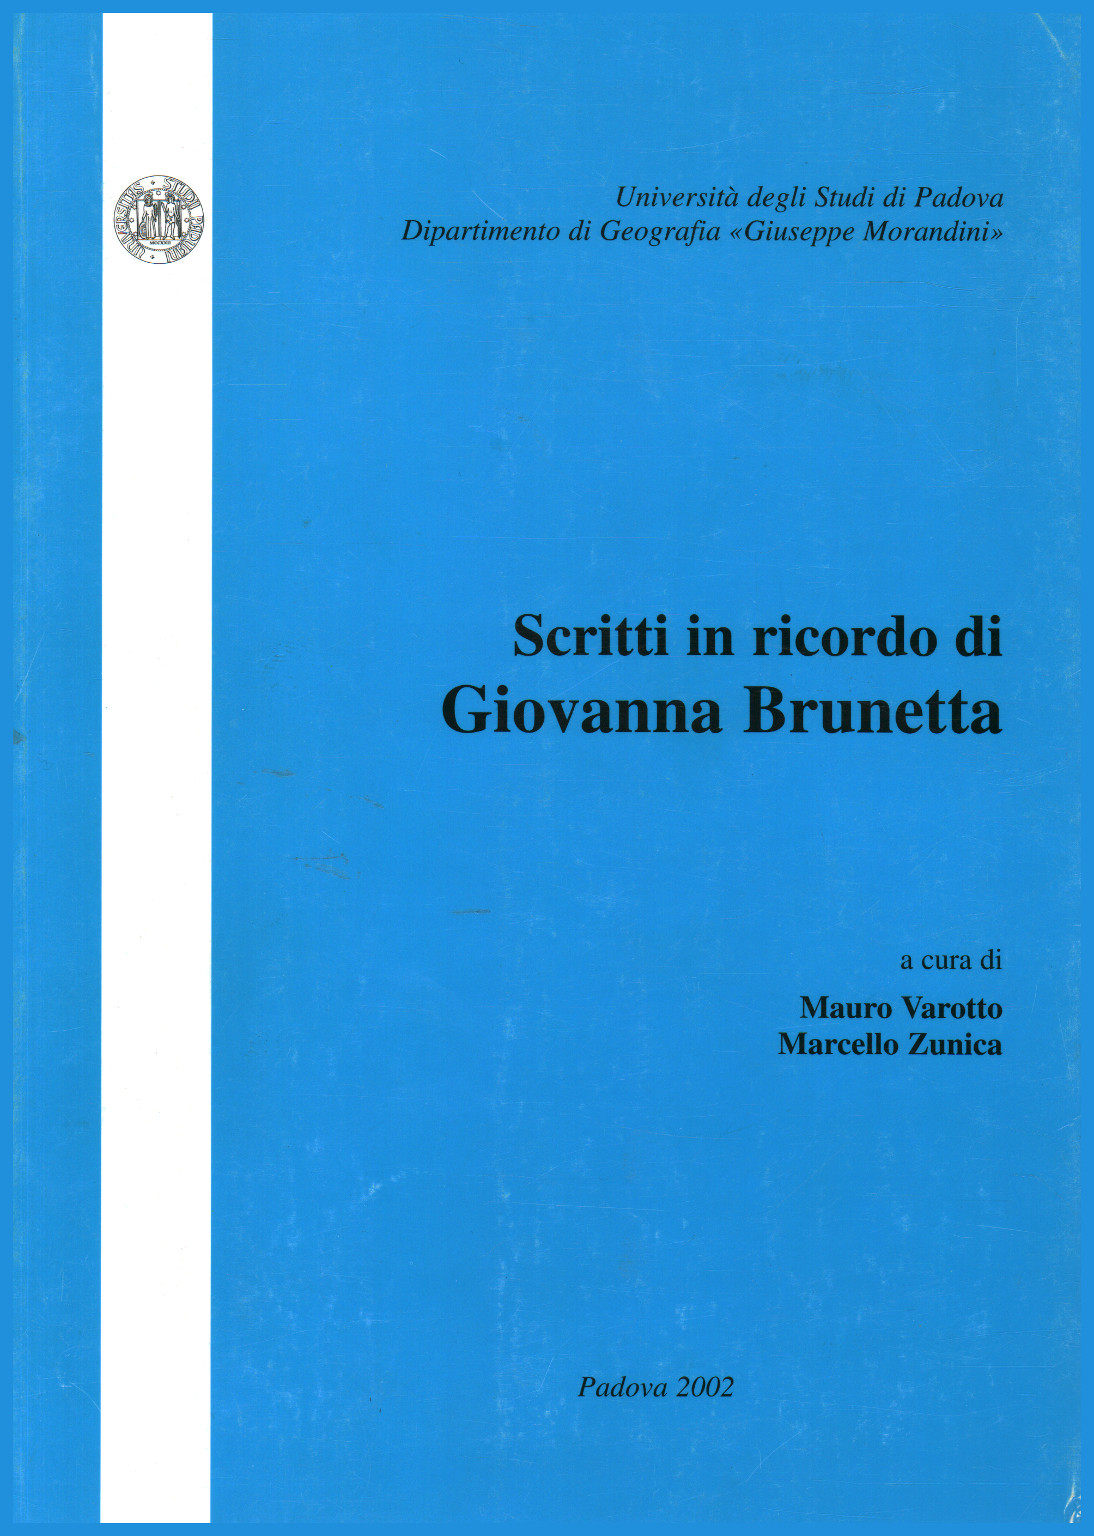 Écrits à la mémoire de Giovanna Brunetta, Mauro Varotto Marcello Zunica